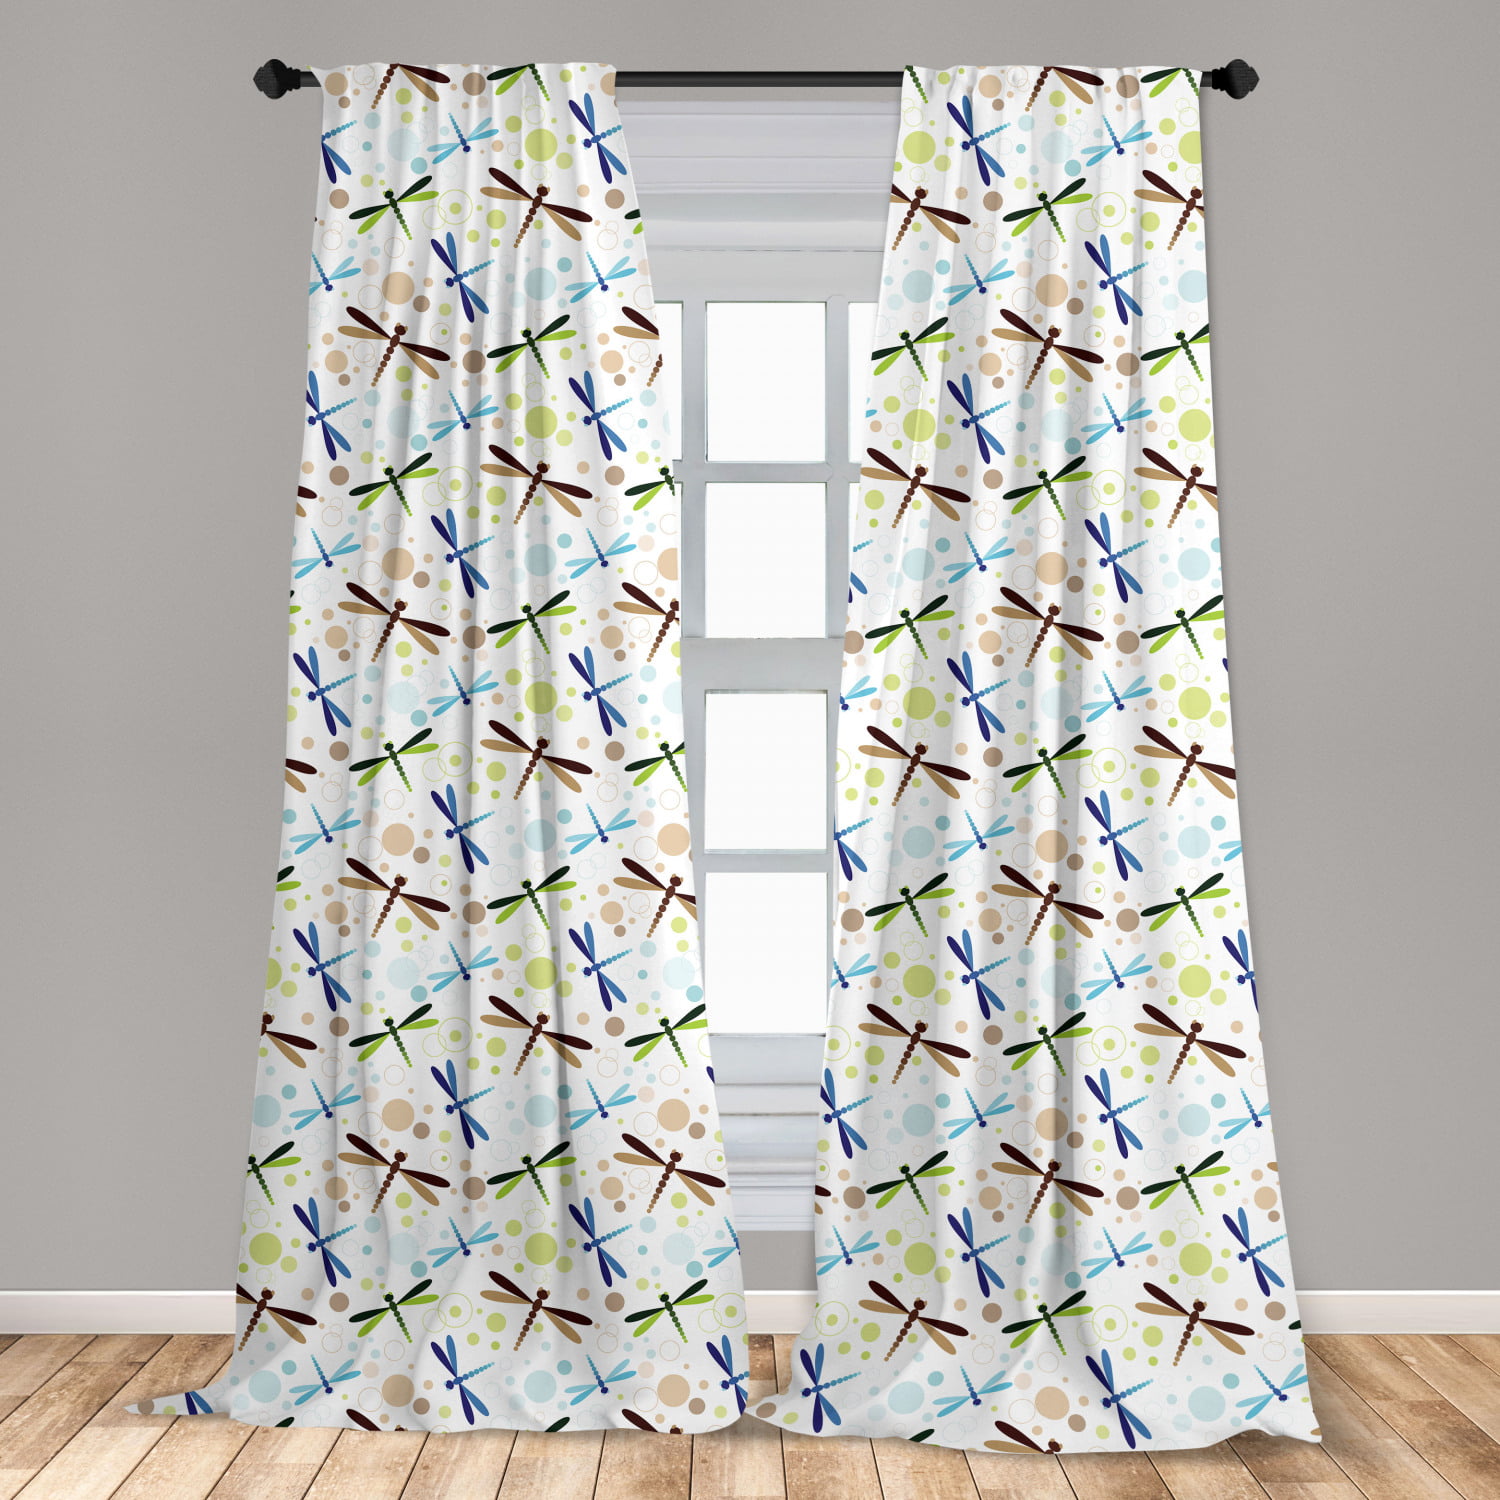 Dragonflies Curtains 2 Panel Set Decor 5 Sizes Available Window Drapes 